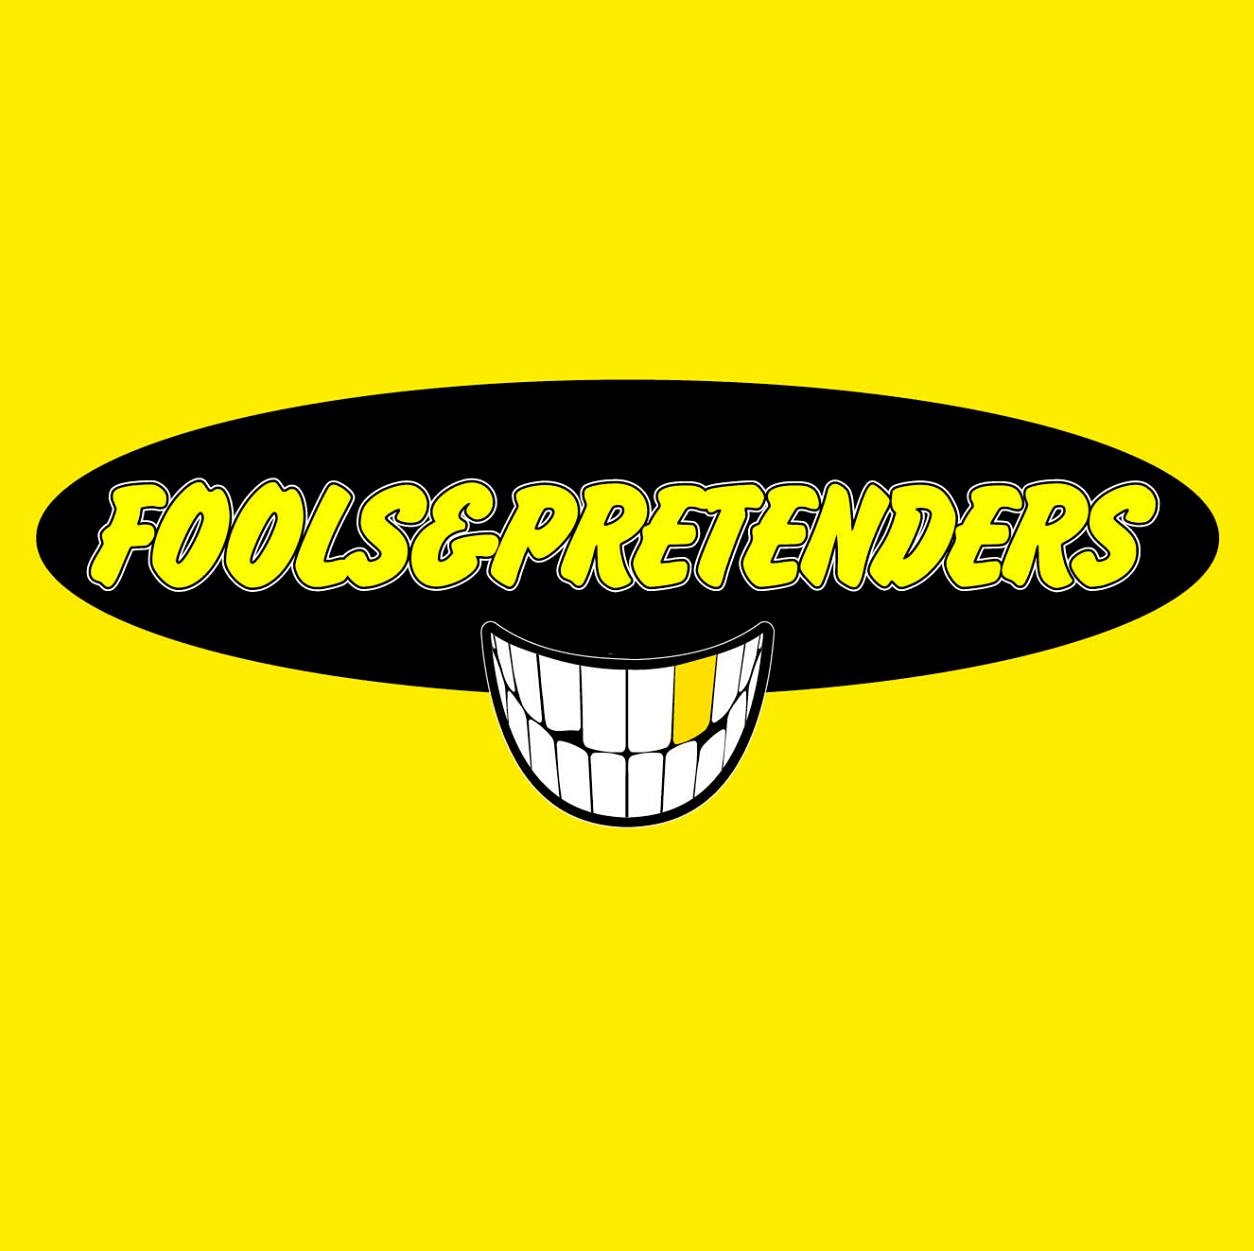 Fools and Pretenders